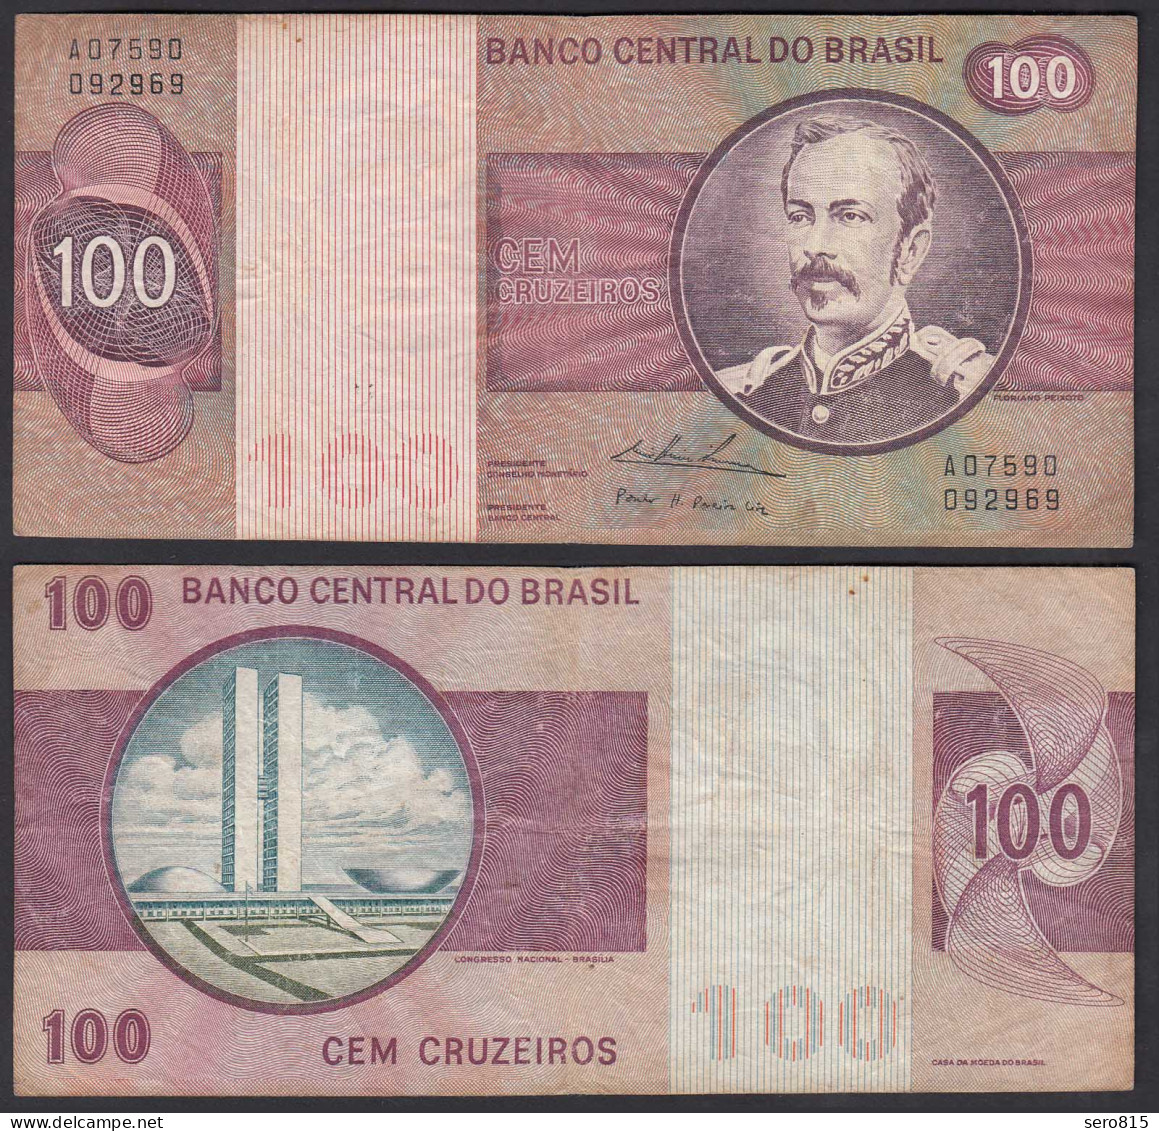 Brasilien - Brazil 100 Cruzados Banknote (1974) Pick 195 Aa F+ (4+) Sig.18 - Other - America